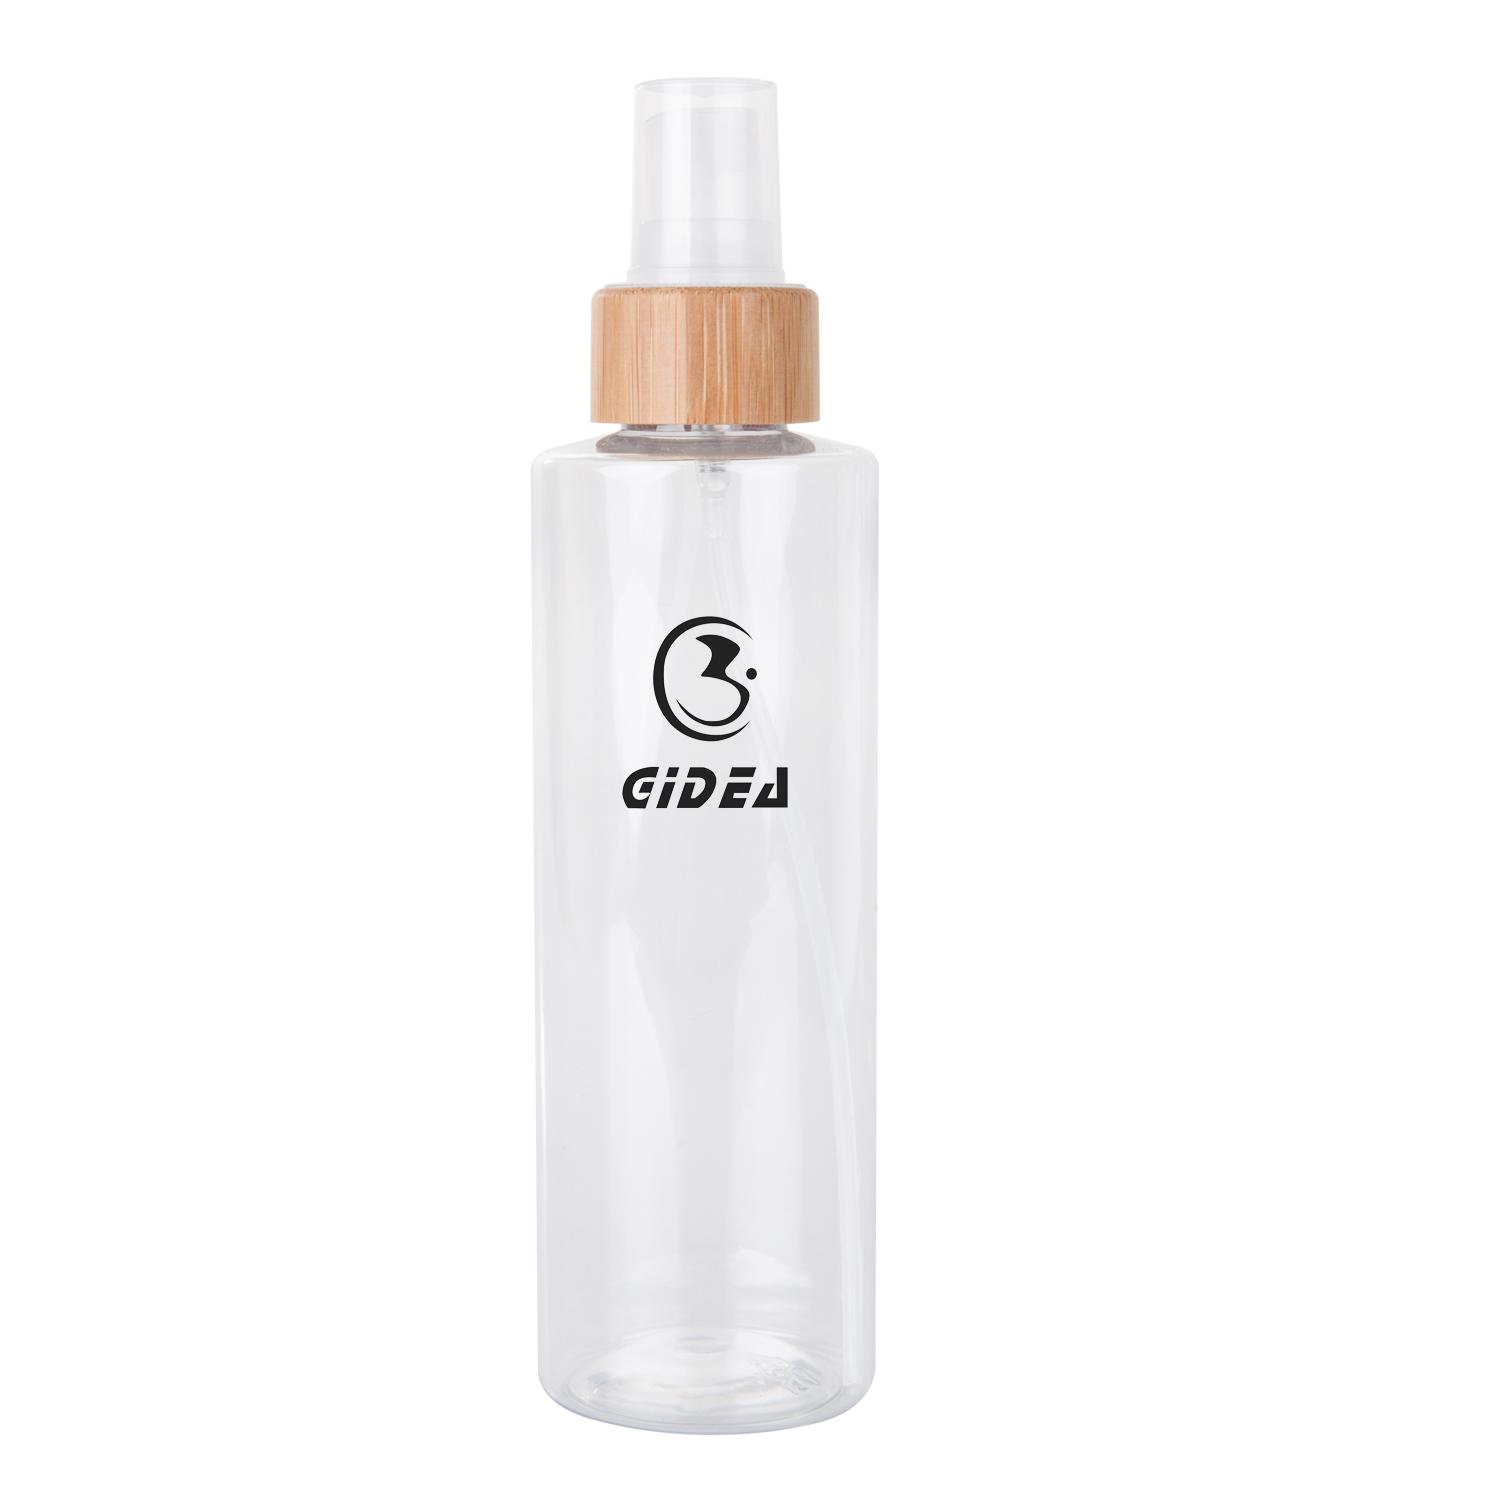 100ml 250ml PET Plastic Spray Pump Bottle With Bamboo Collar